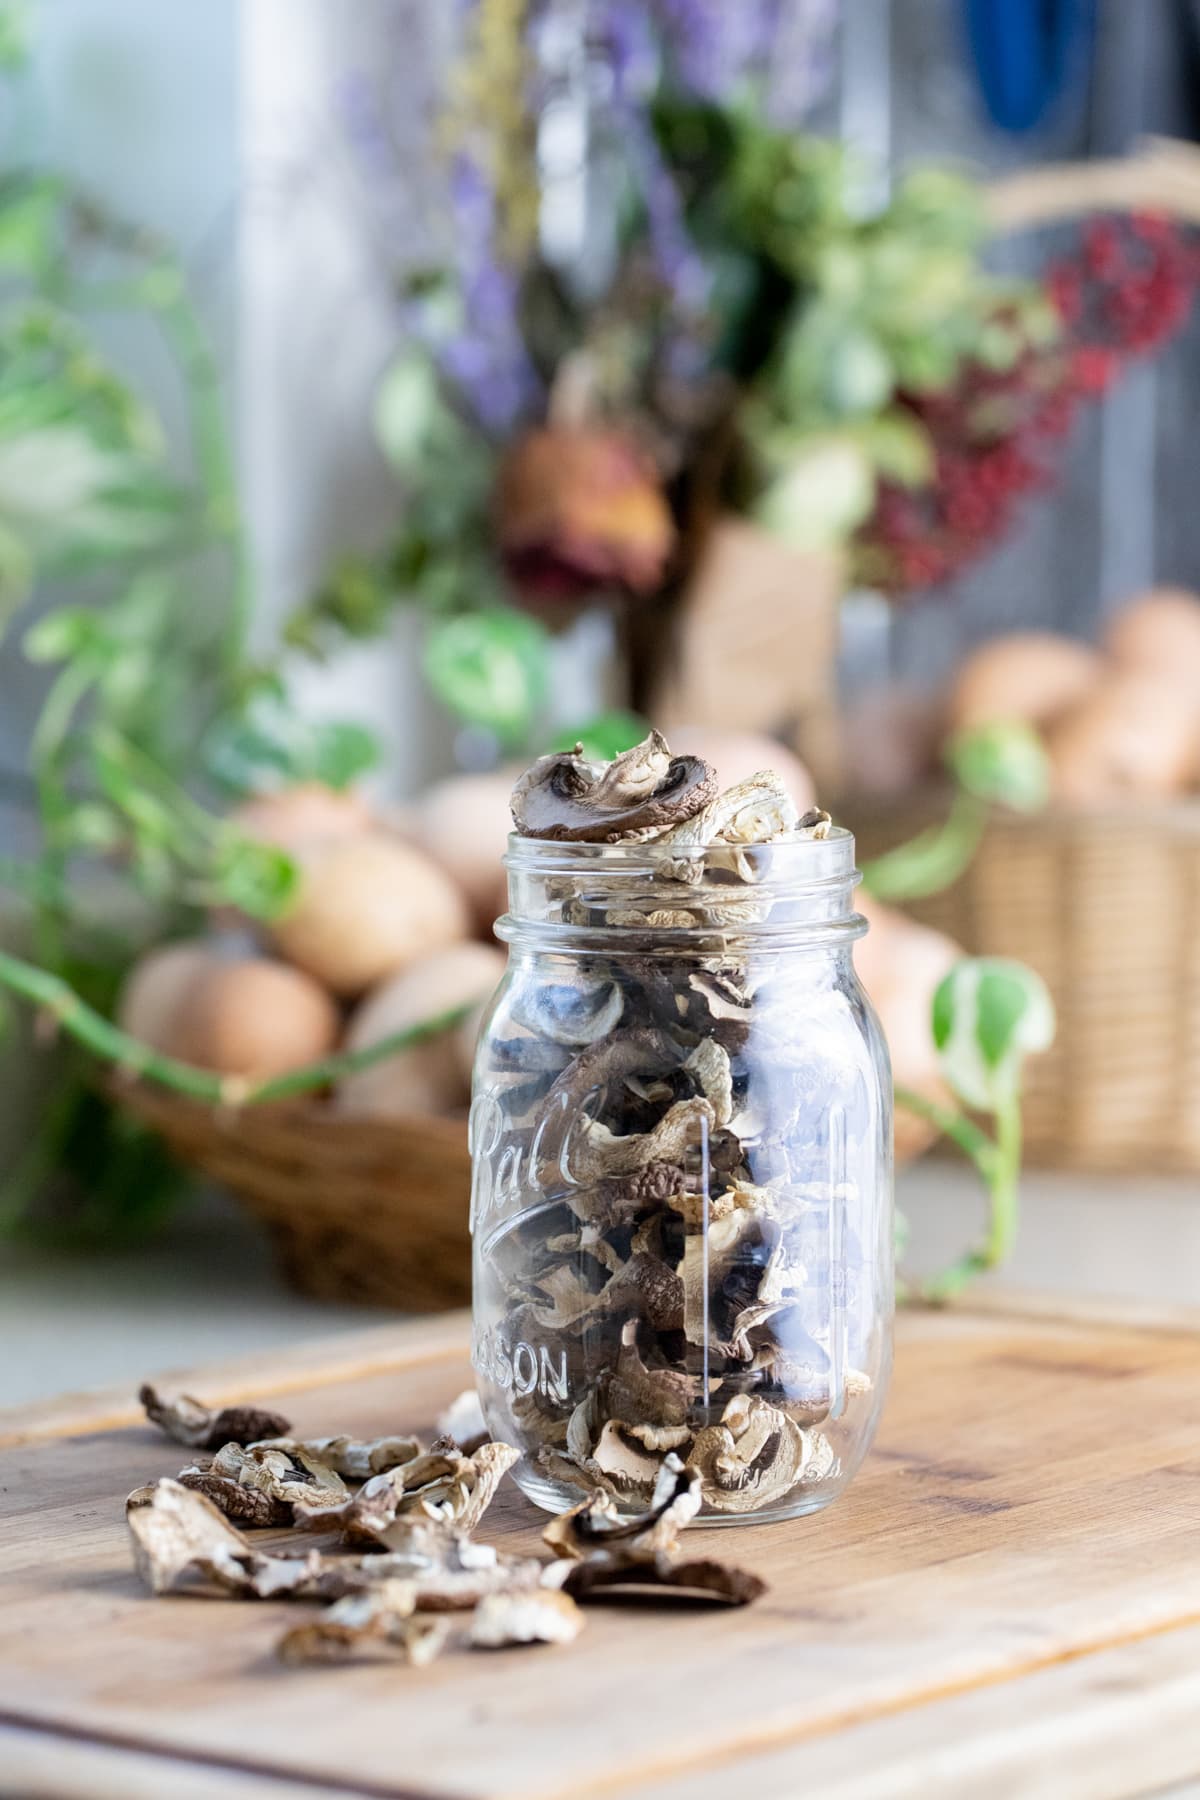 dehydrated mushrooms in a jar